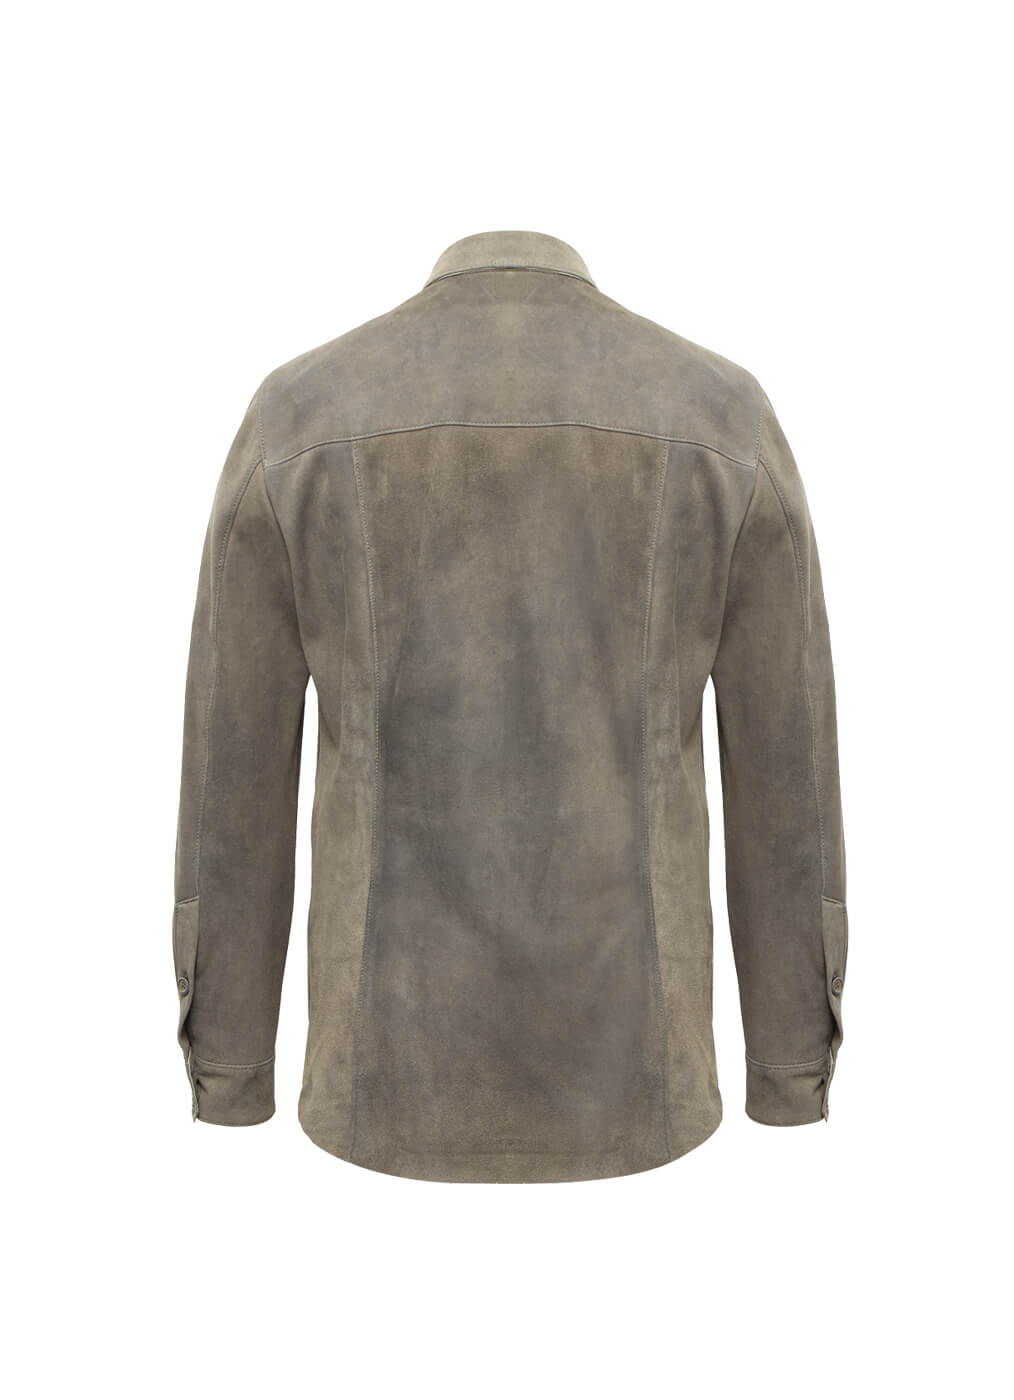 Goat Leather Shirt Men “Little Rock”, dark grey